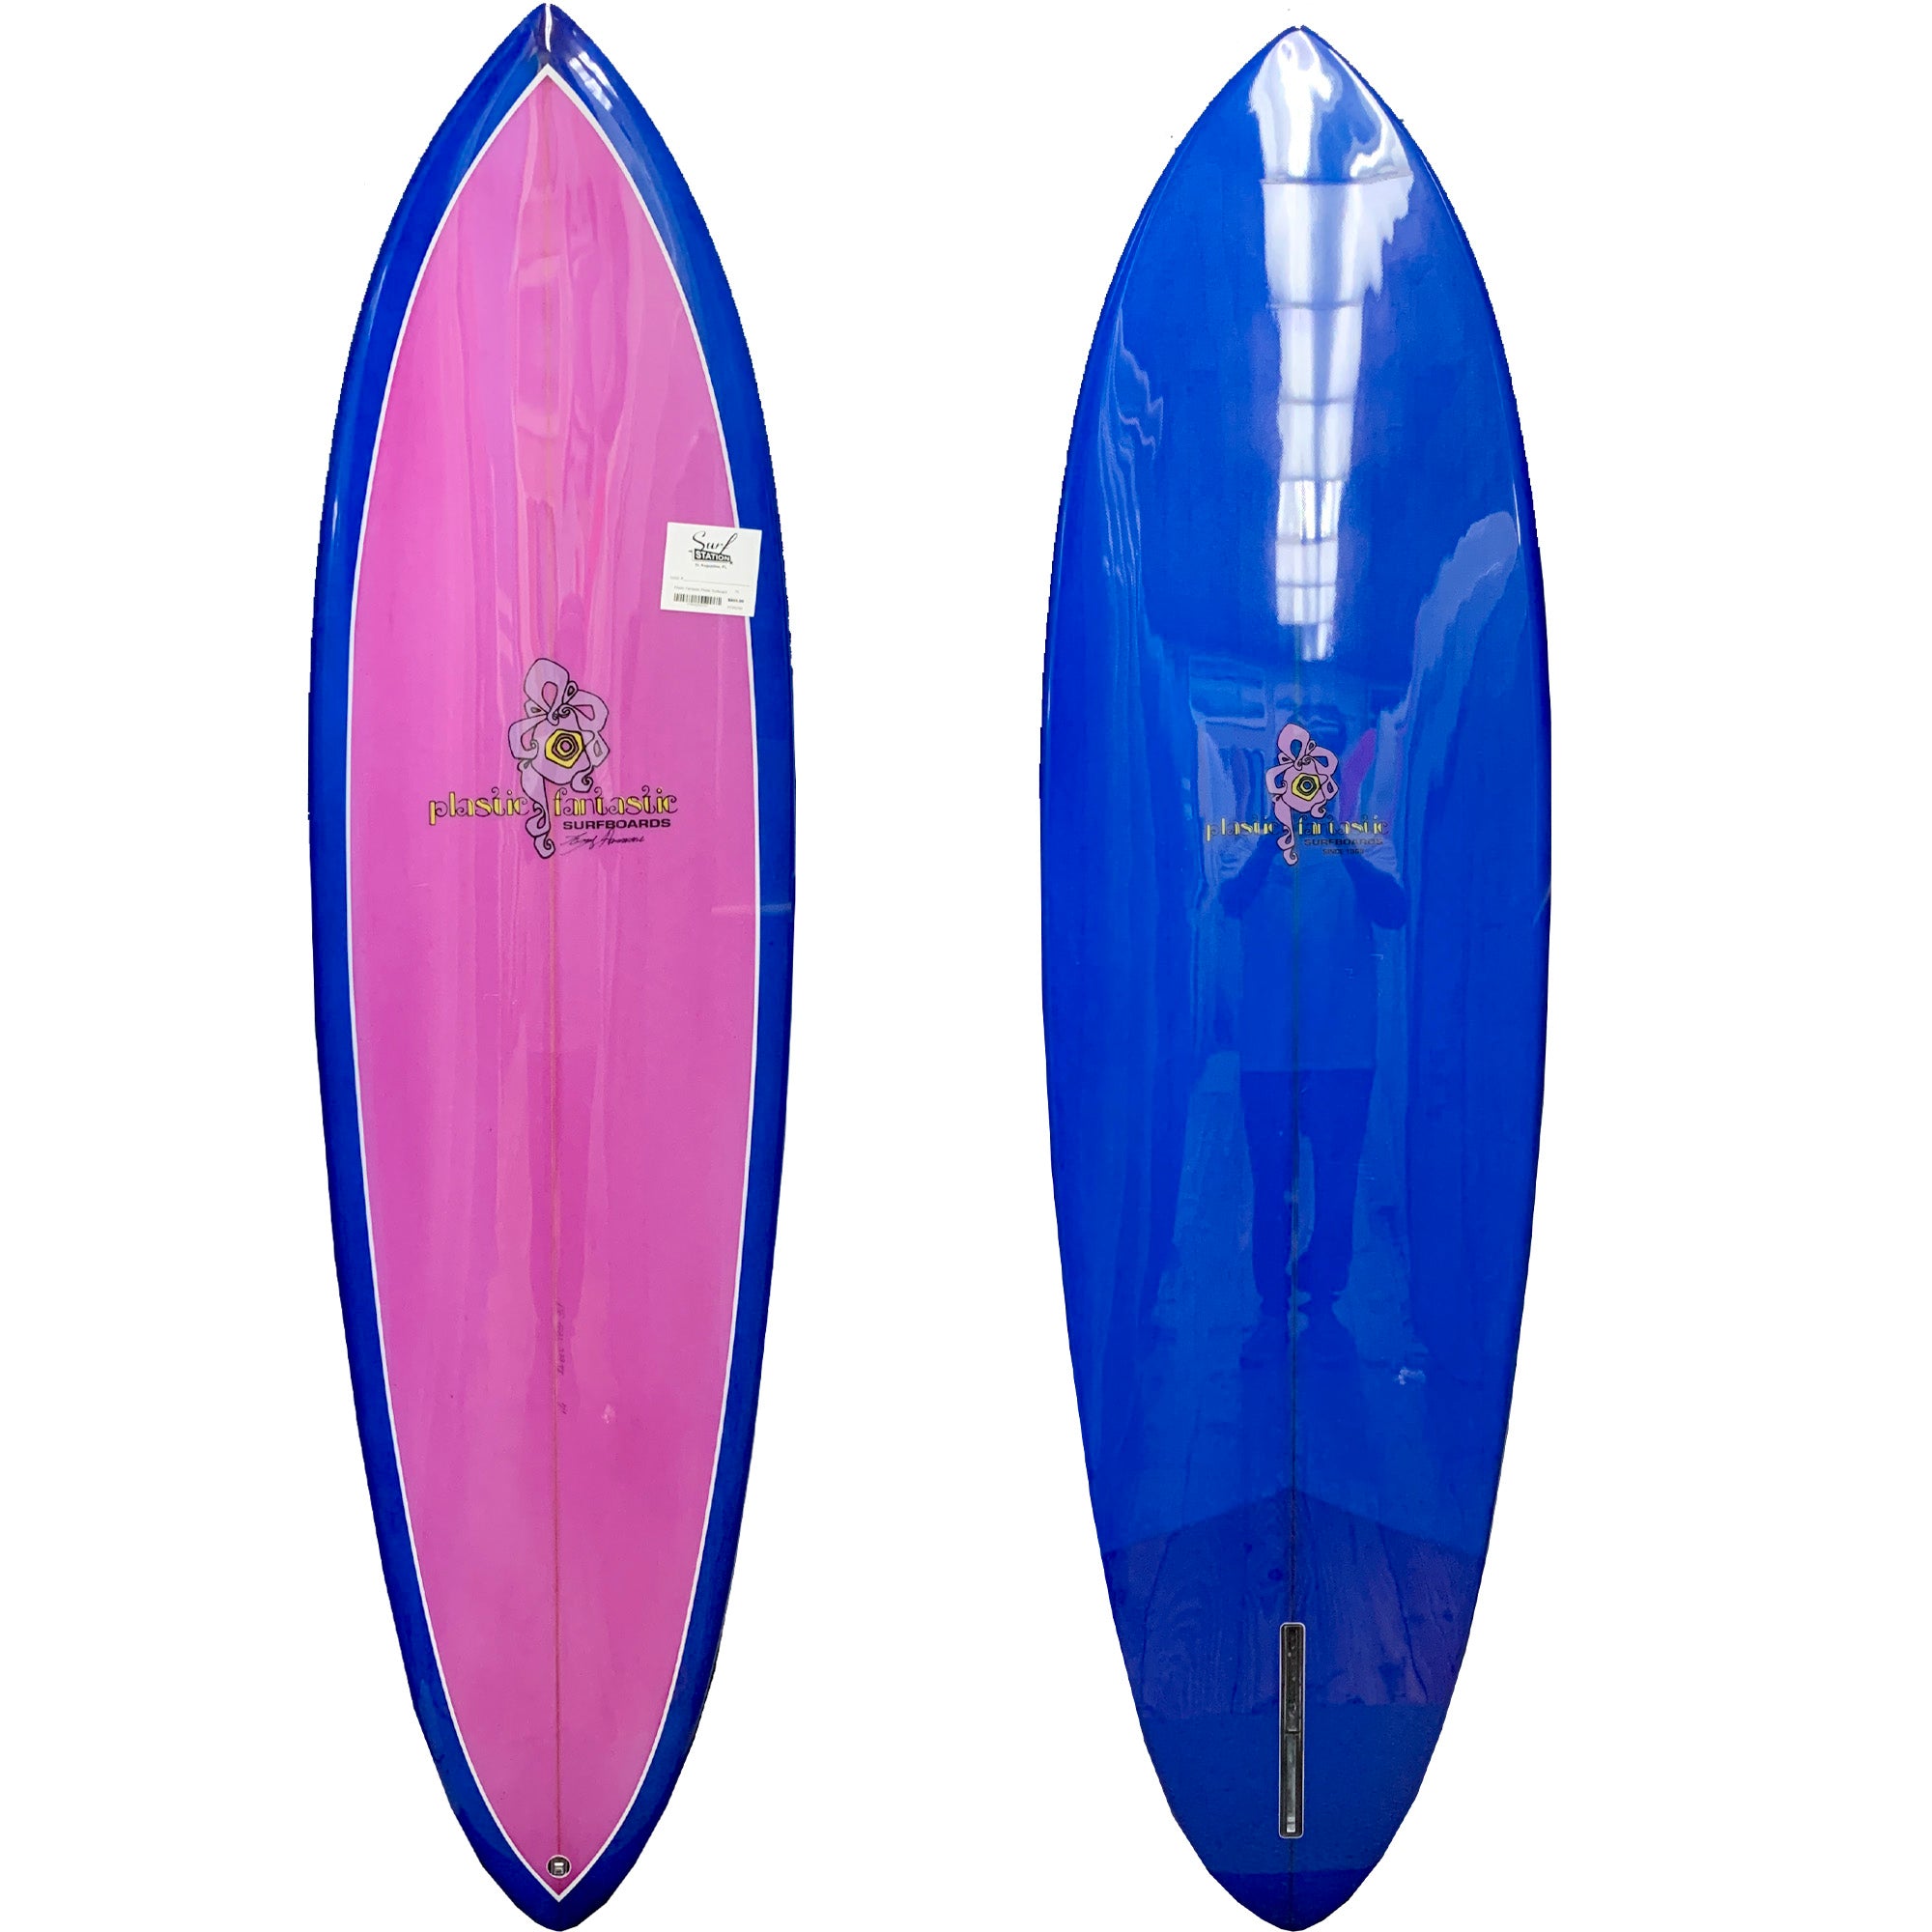 Plastic Fantastic Pintail 7'0 Surfboard